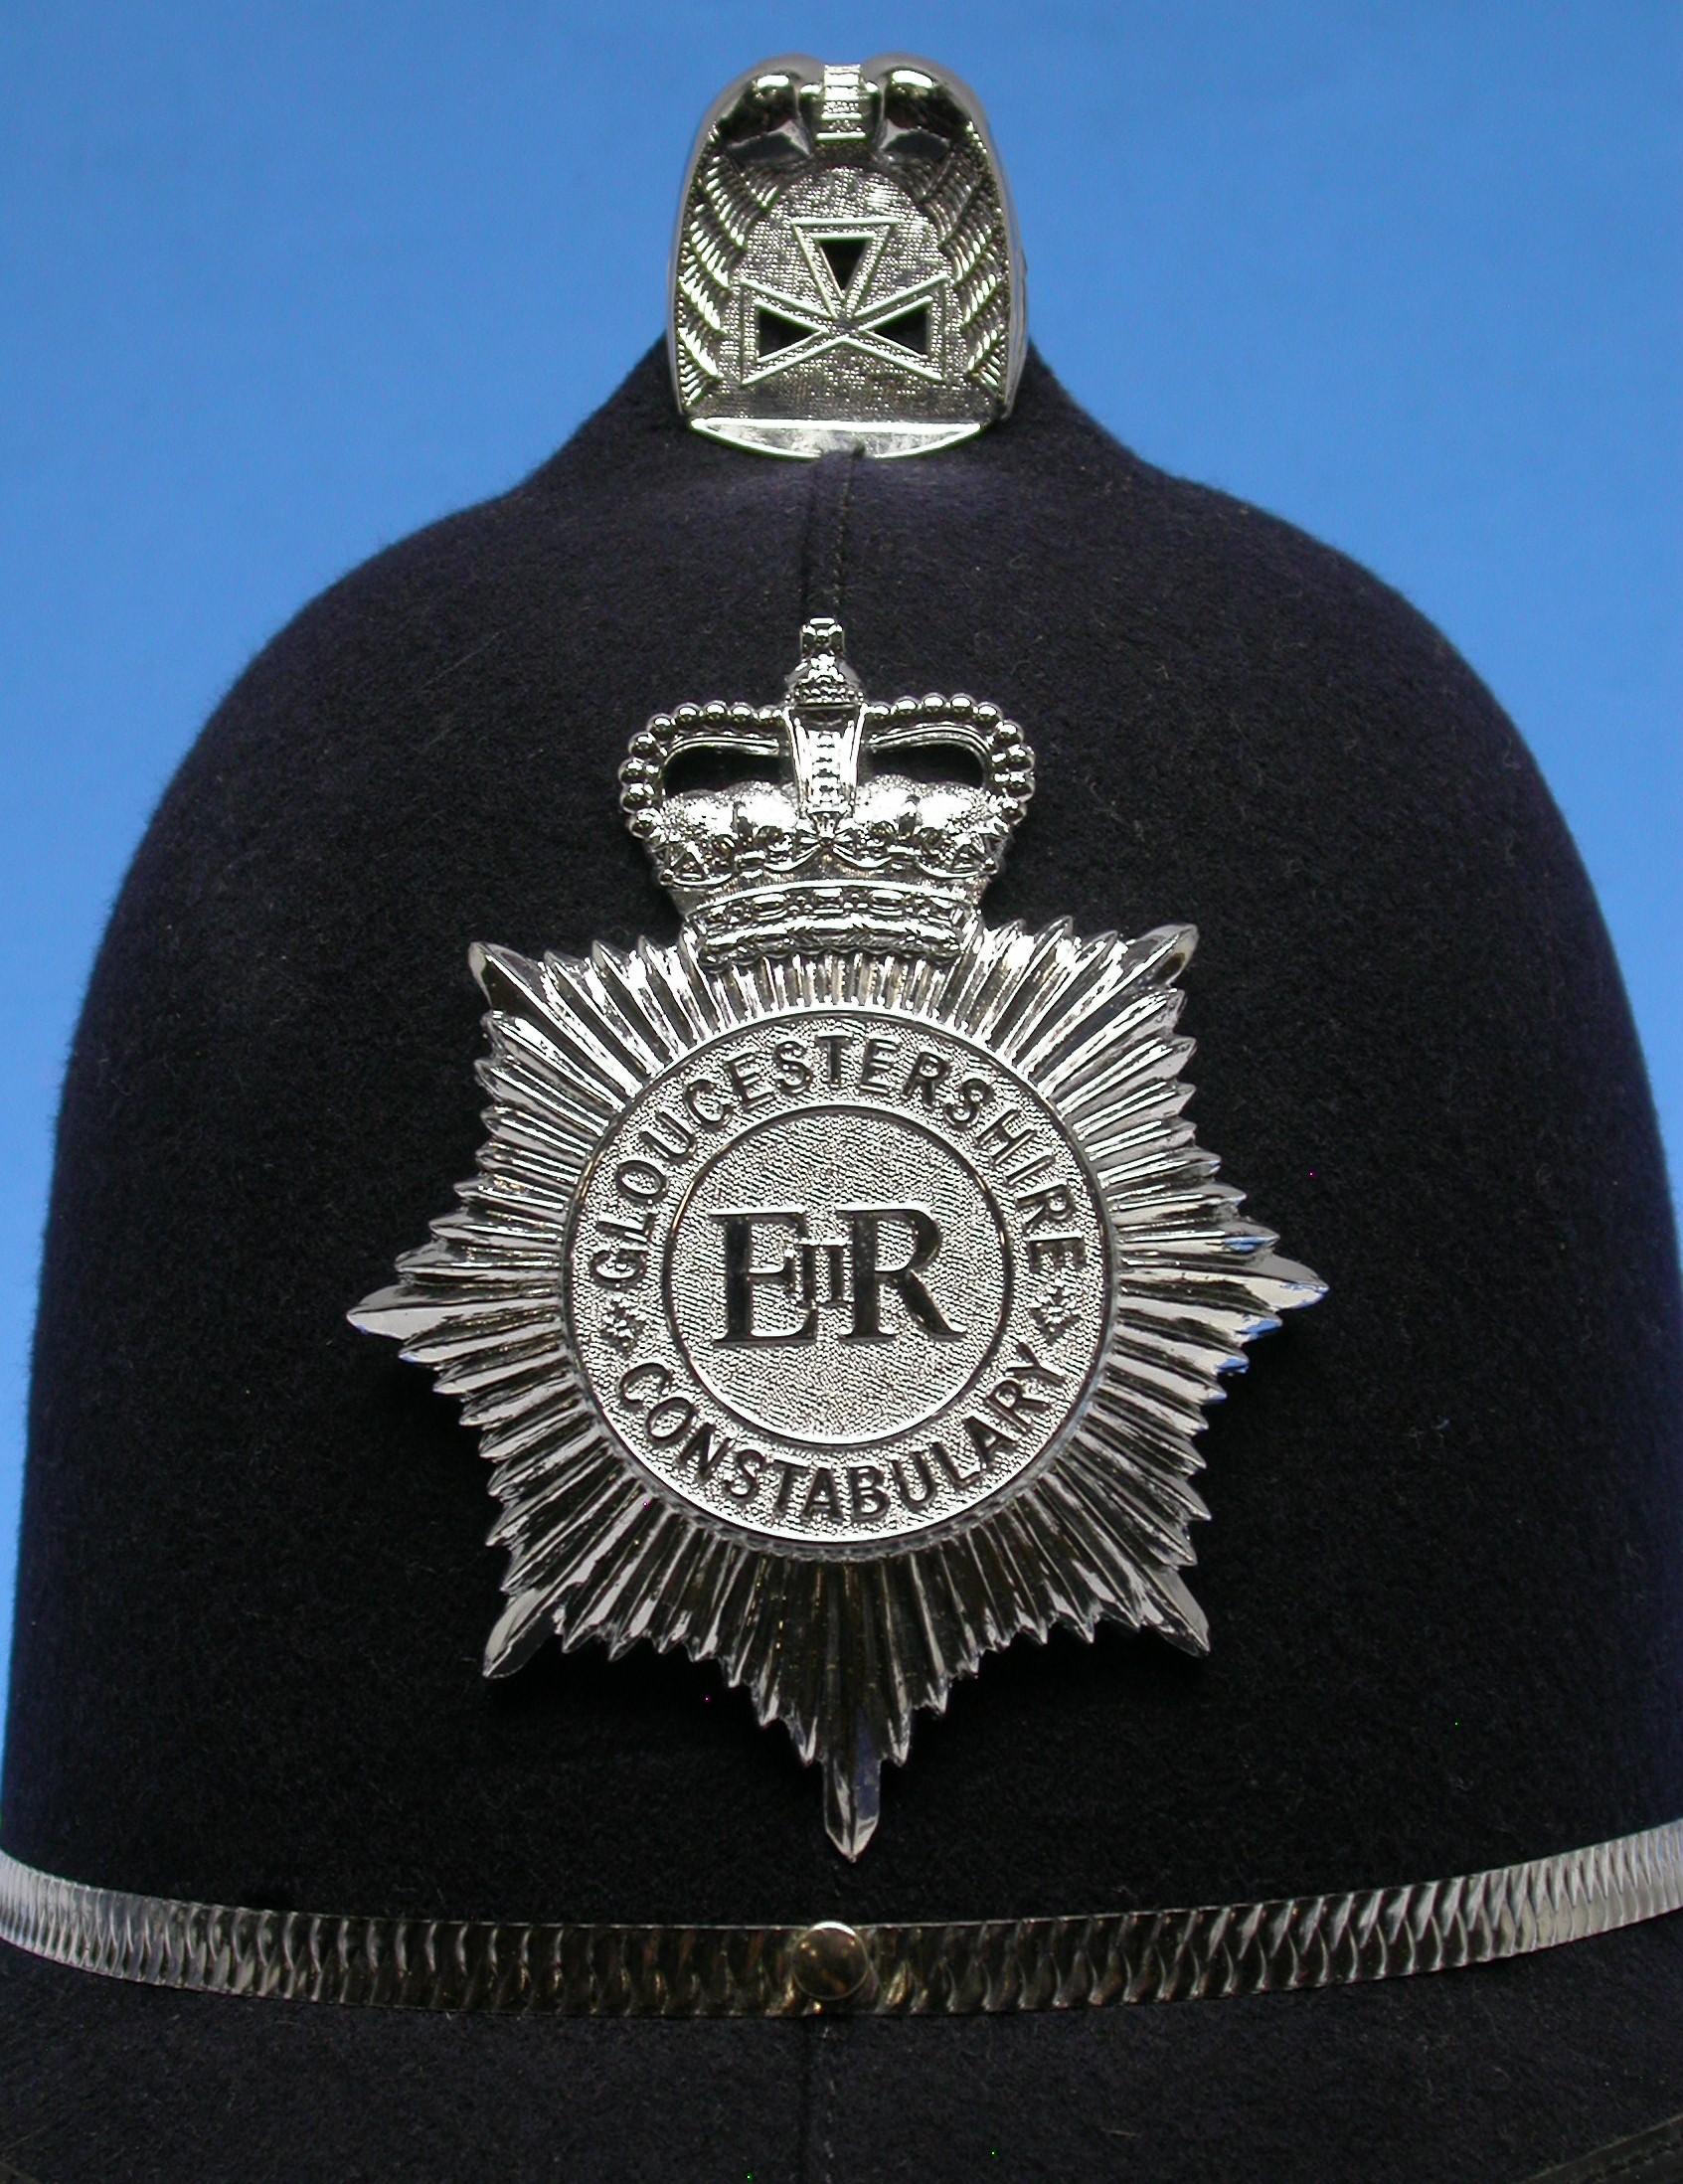 British Glouchestershire Constabulary "Bobby" Helmet ( ACR)